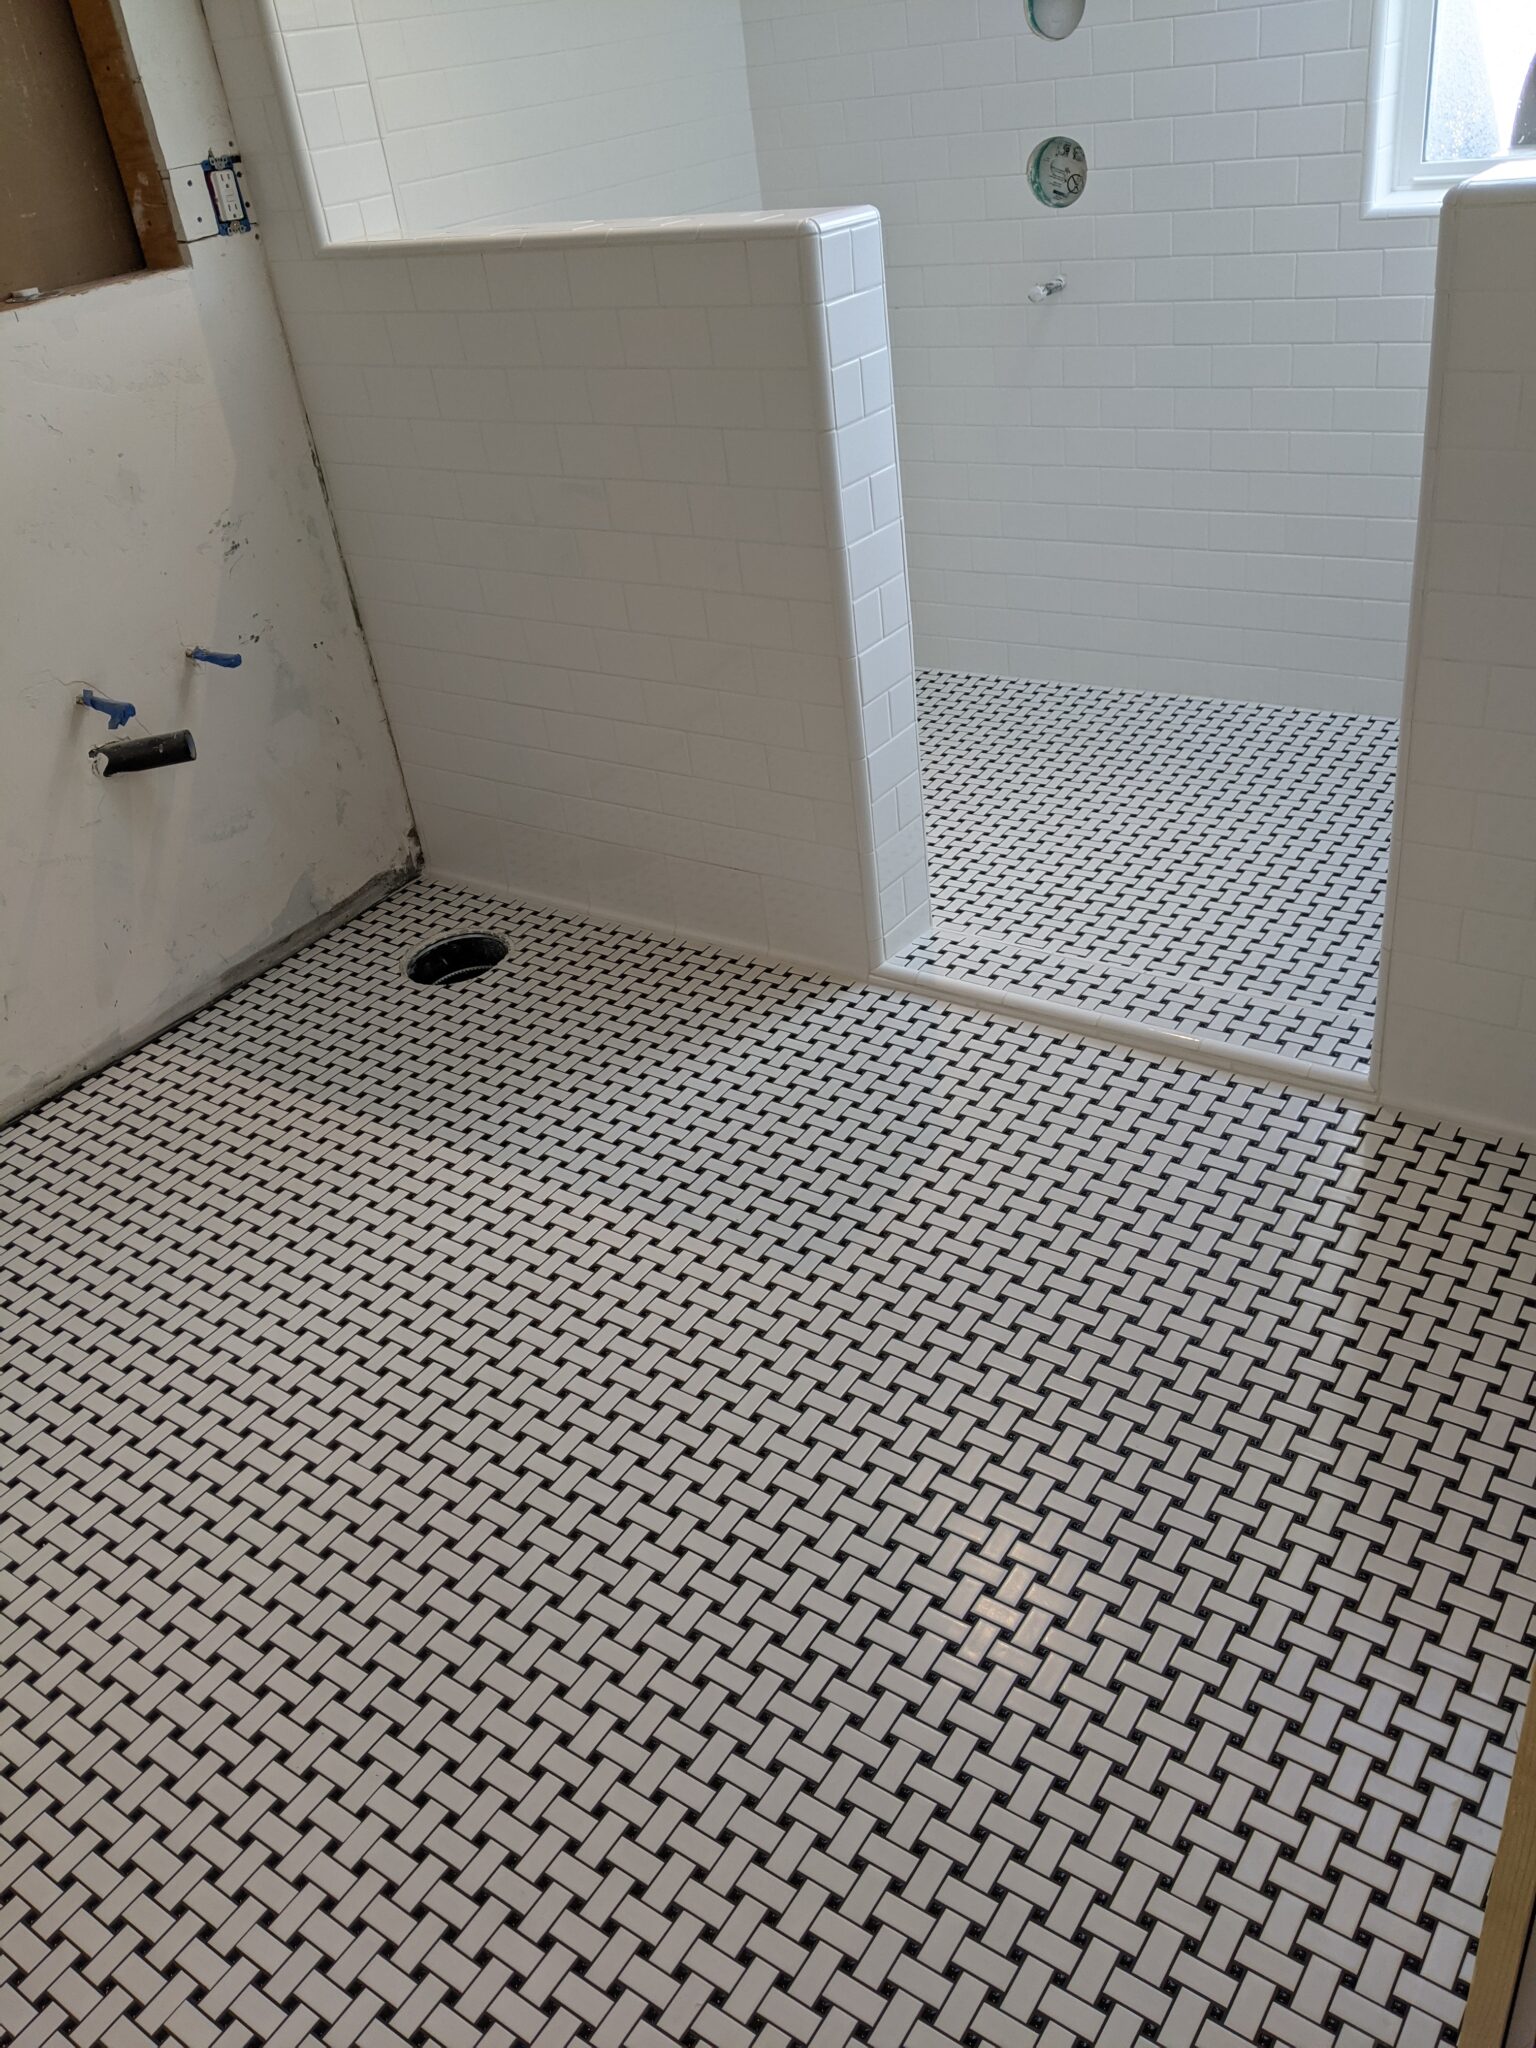 3×6 subway tile shower – bathroom floor